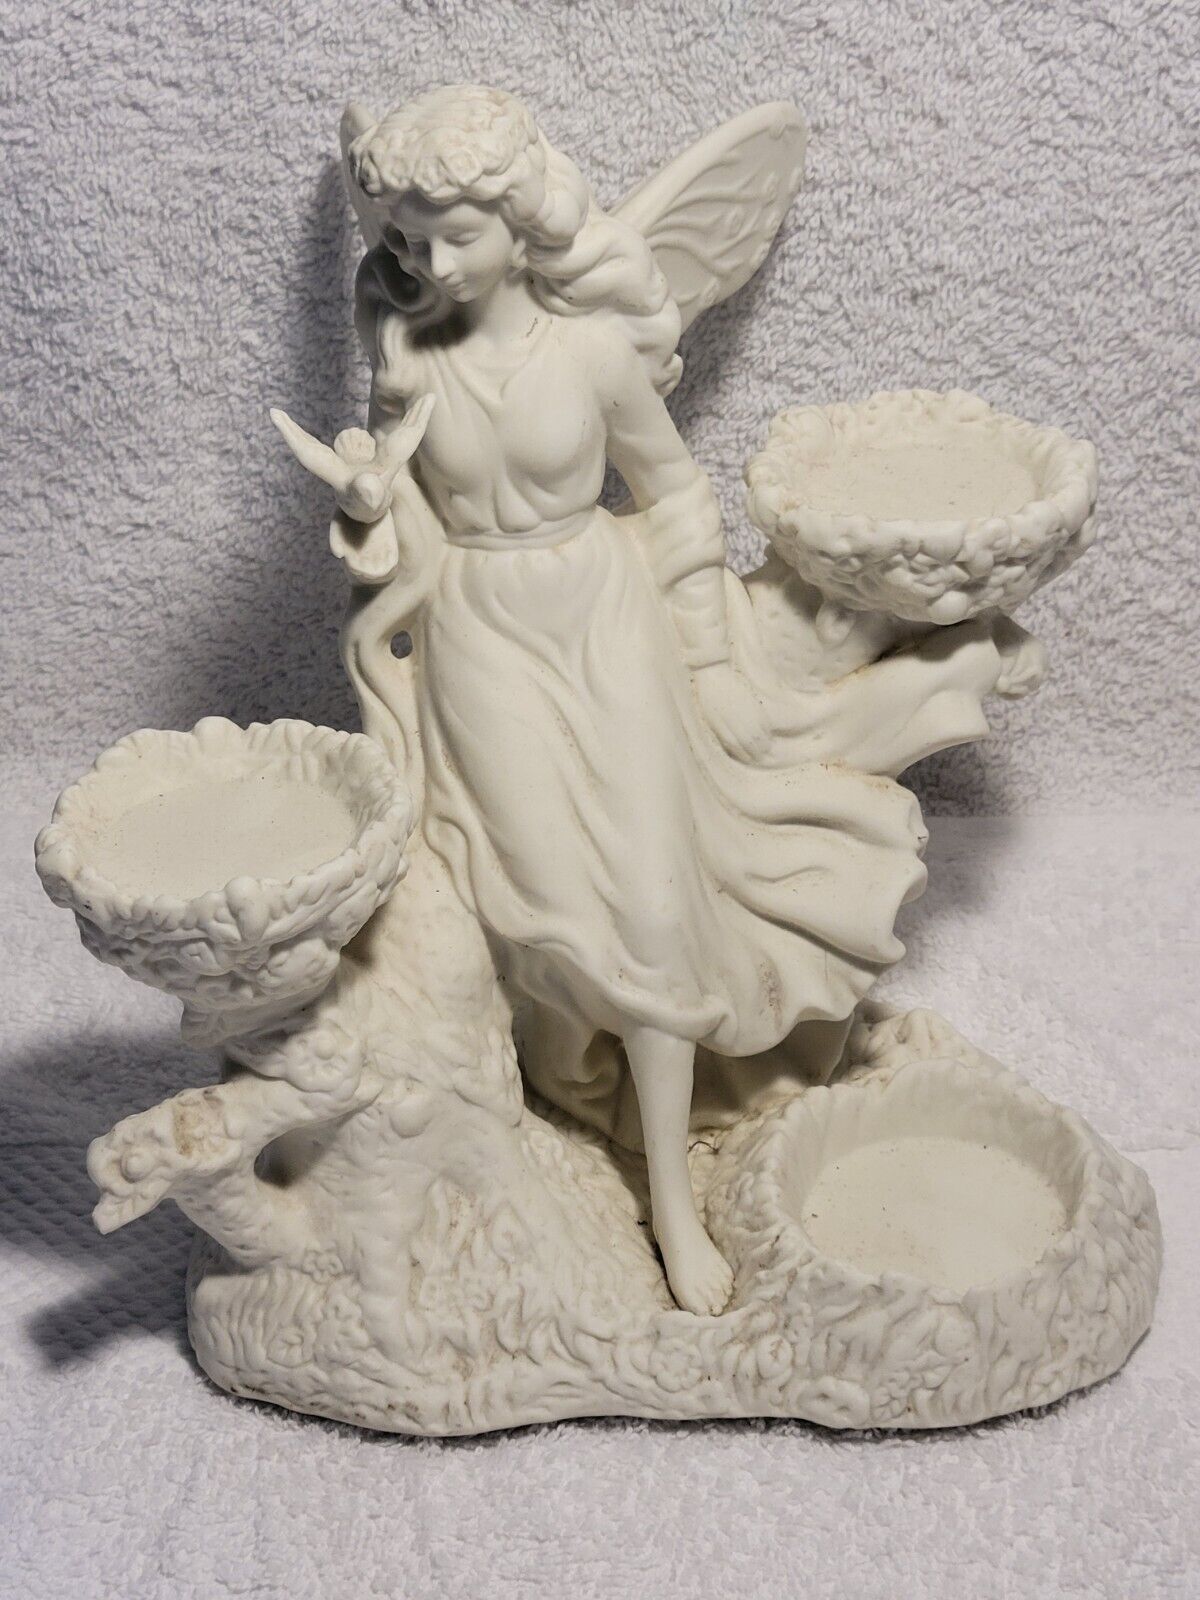 PartyLite P7298 Ariana\'s Garden Fairy Statue Tea Light Candle Holder Figurine